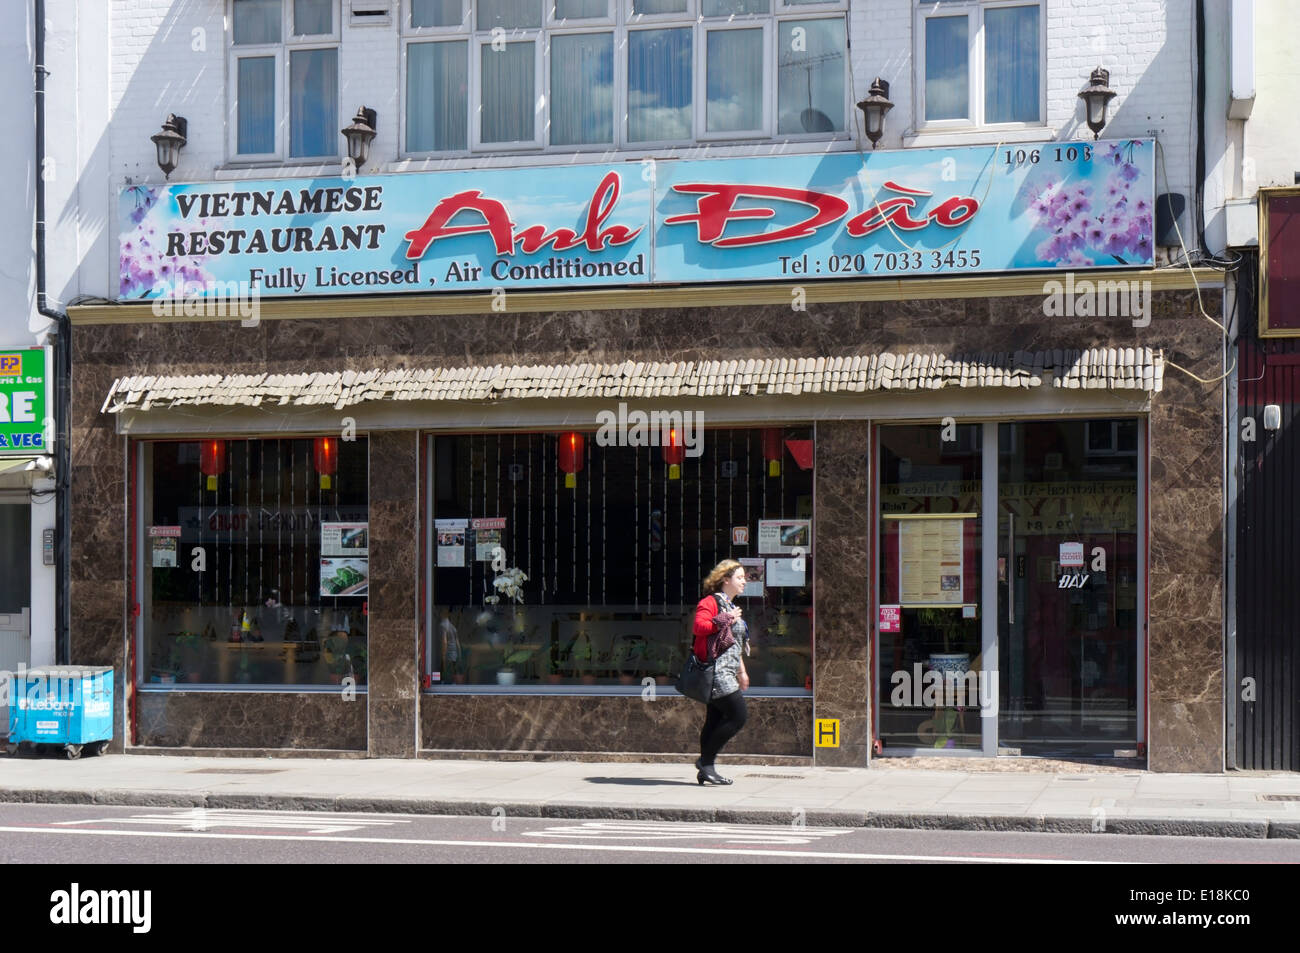 La ANH Dào restaurante vietnamita en Kingsland Road, East London. Foto de stock